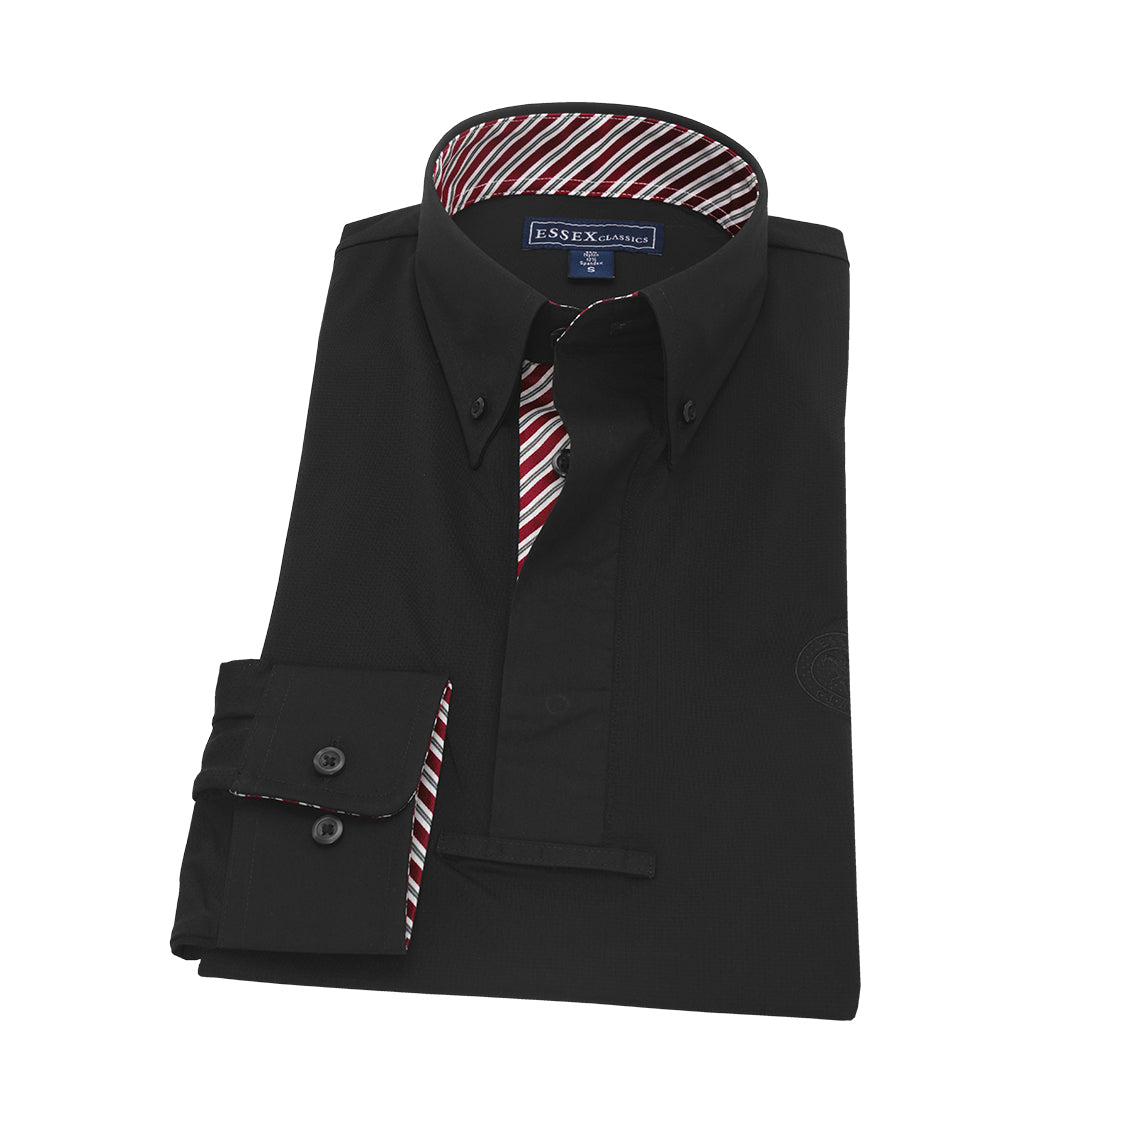 Essex Classics Men’s “Dusk” Black Show Shirt - Halo Stripe